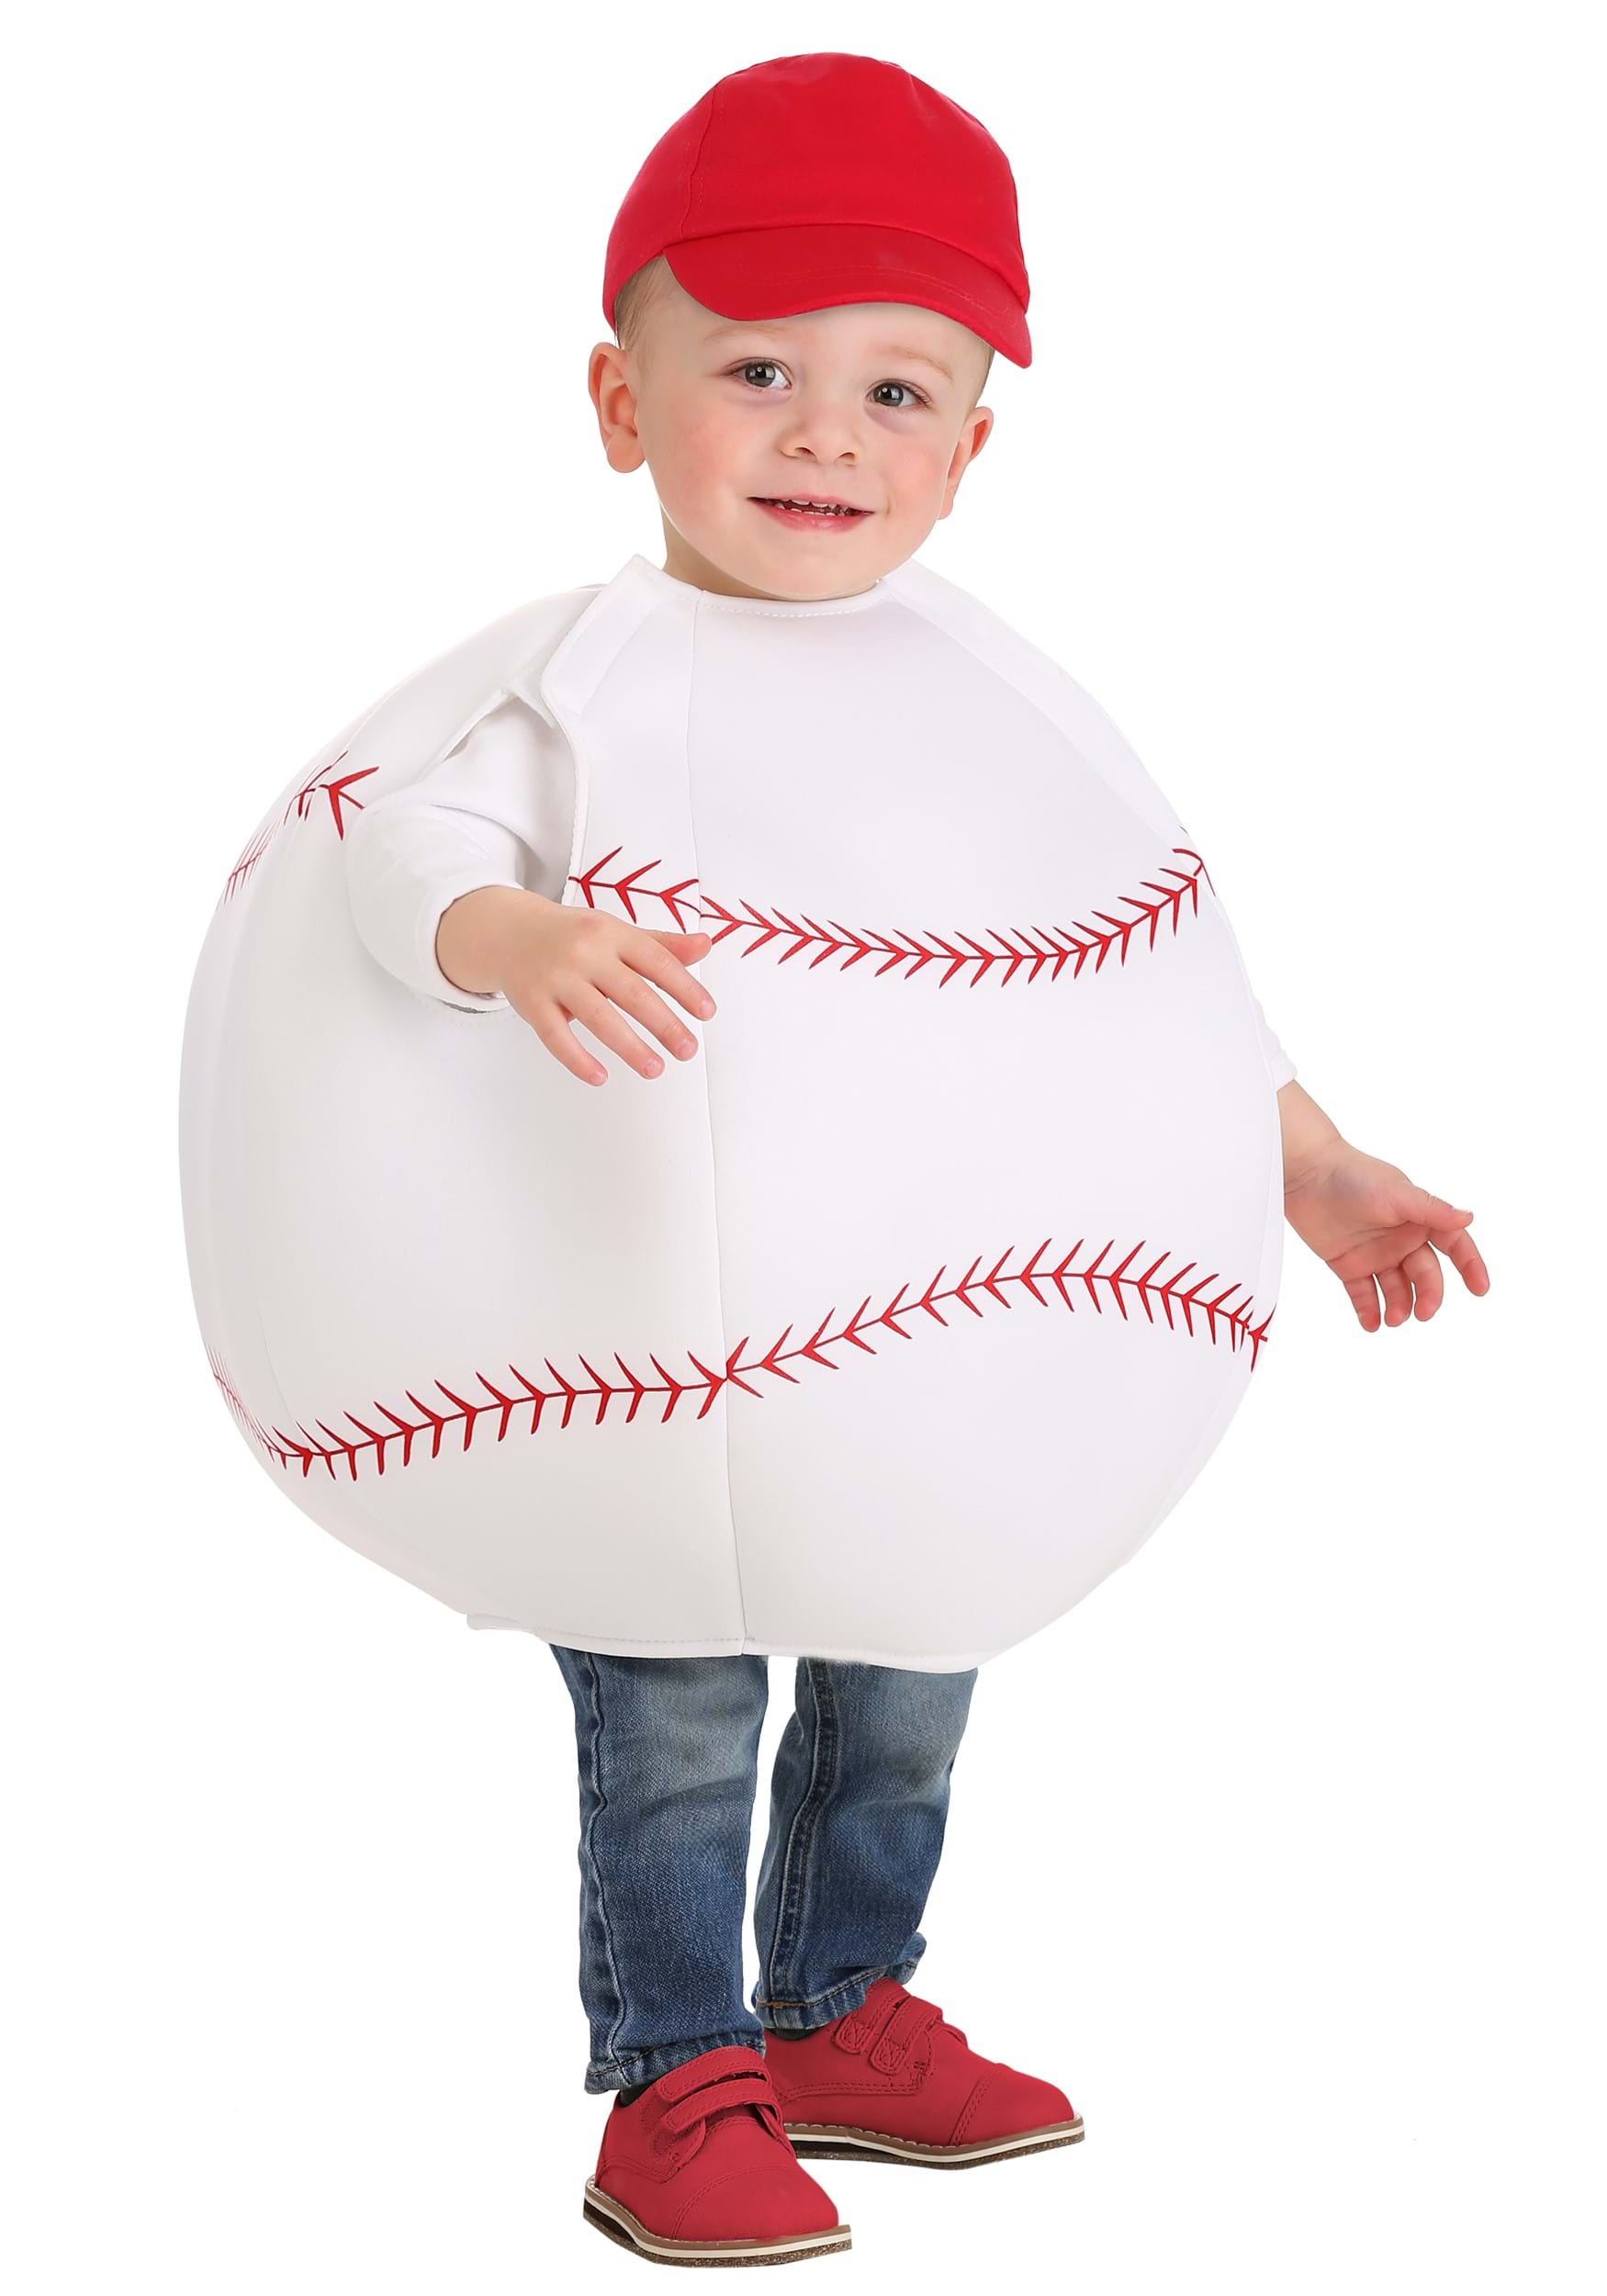 Baseball Player Child Halloween Costume, 3T-4T - oggsync.com